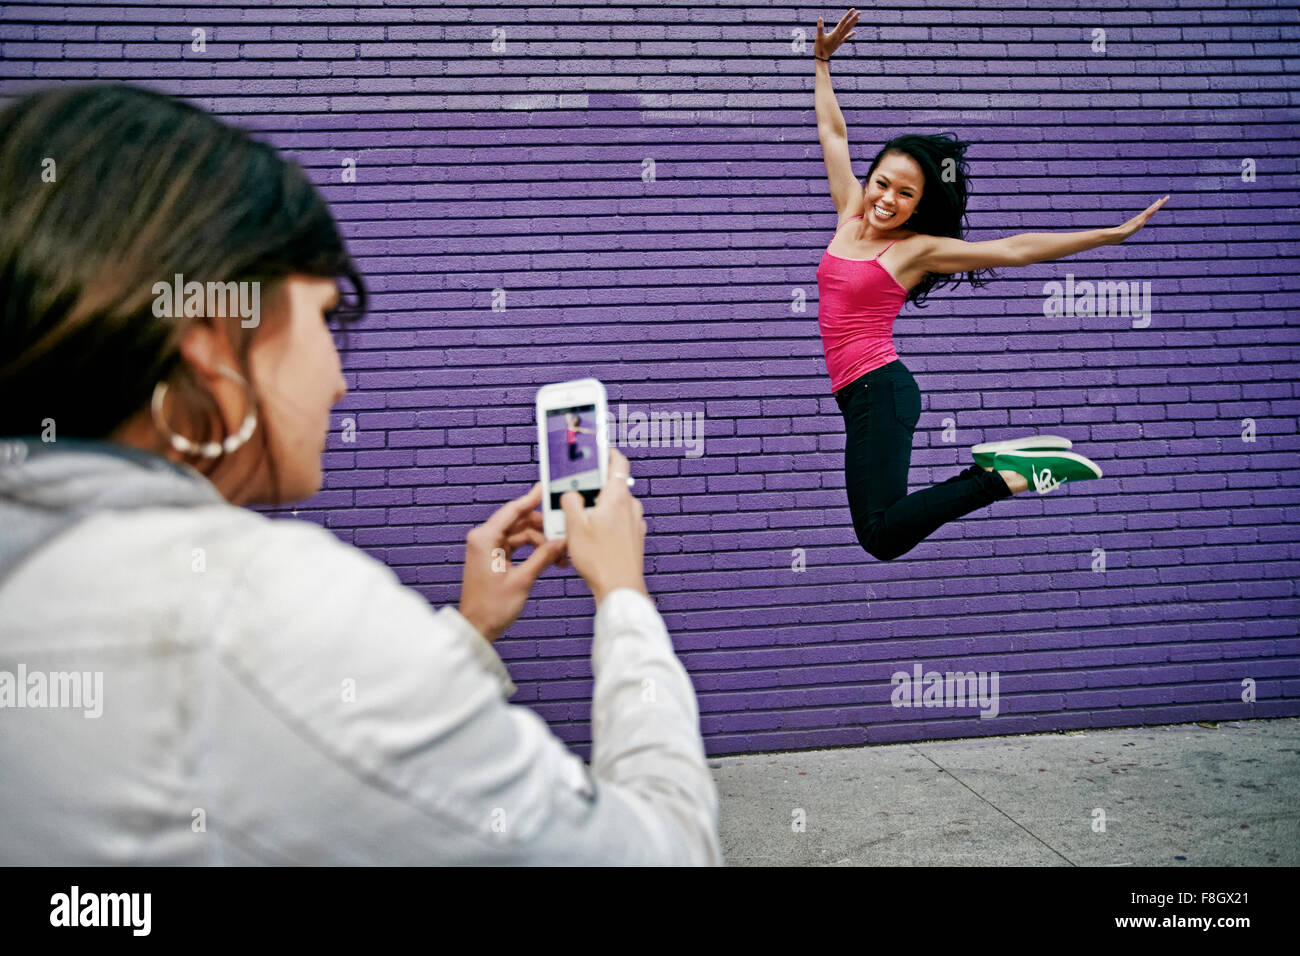 Fotografieren Freundin springen vor Freude Stockfoto